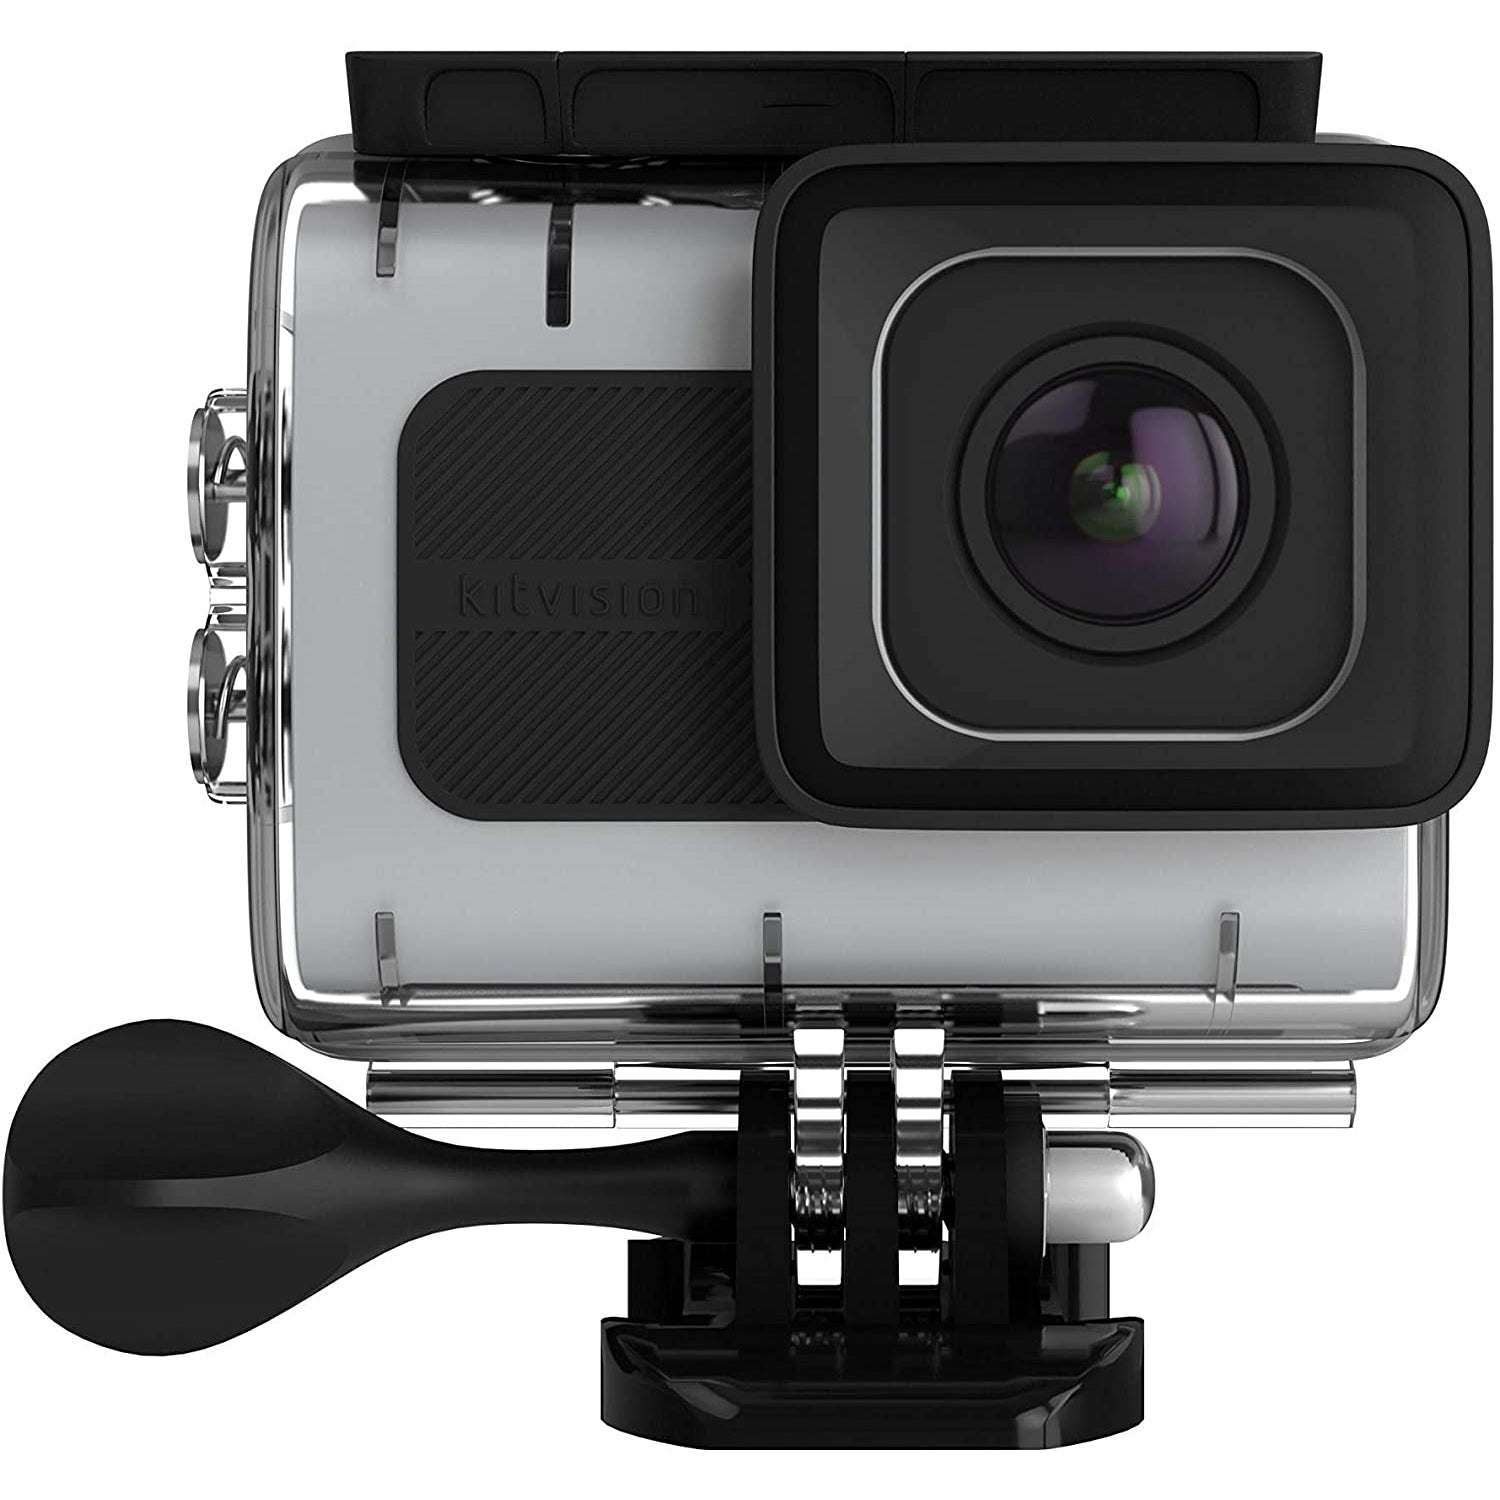 Kitvision Venture 720p Action Camera - Silver and Black